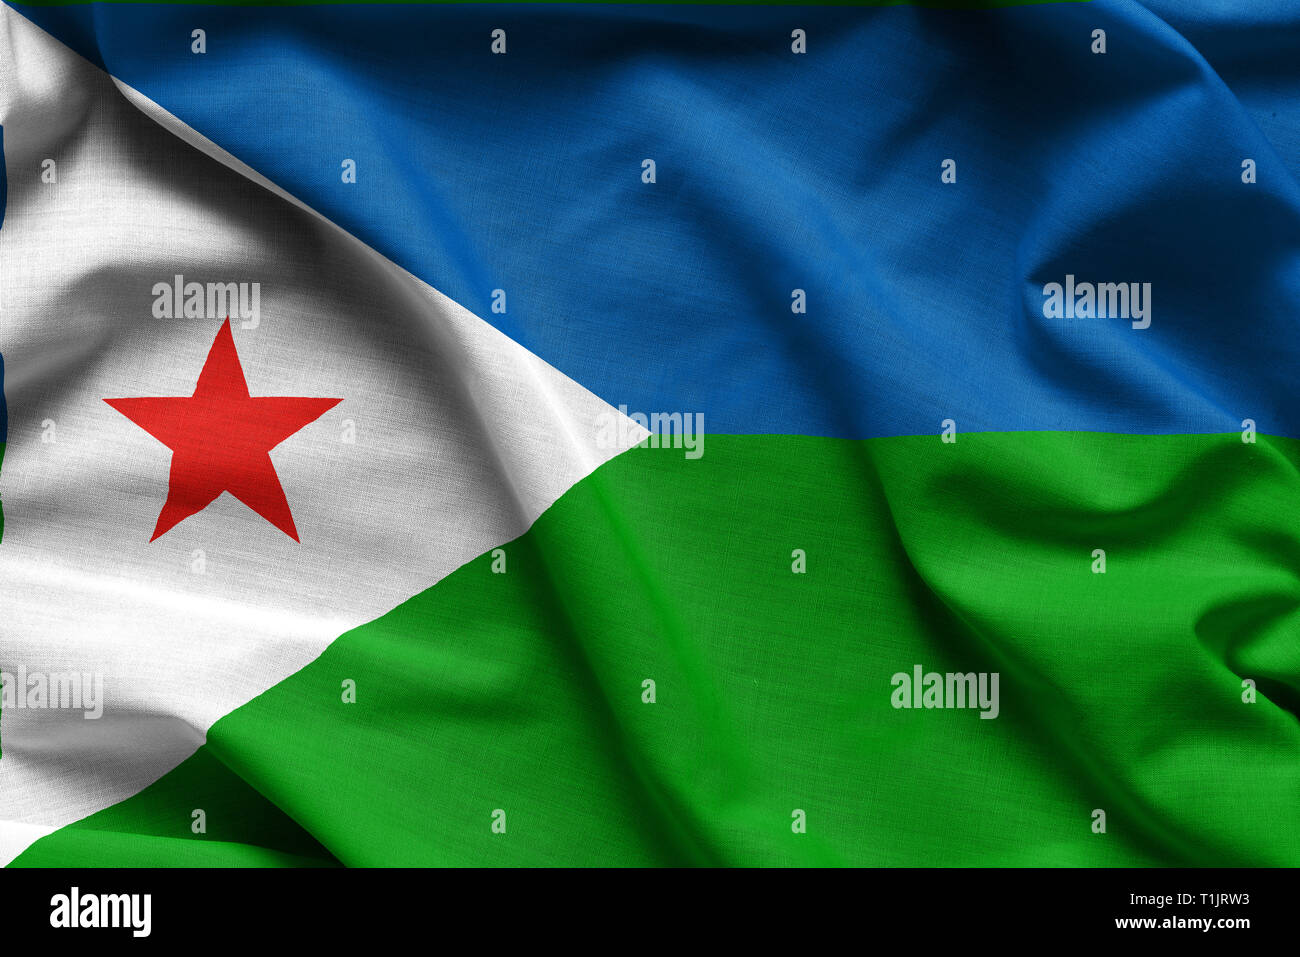 Realistic colourful background, flag of Djibouti Stock Photo